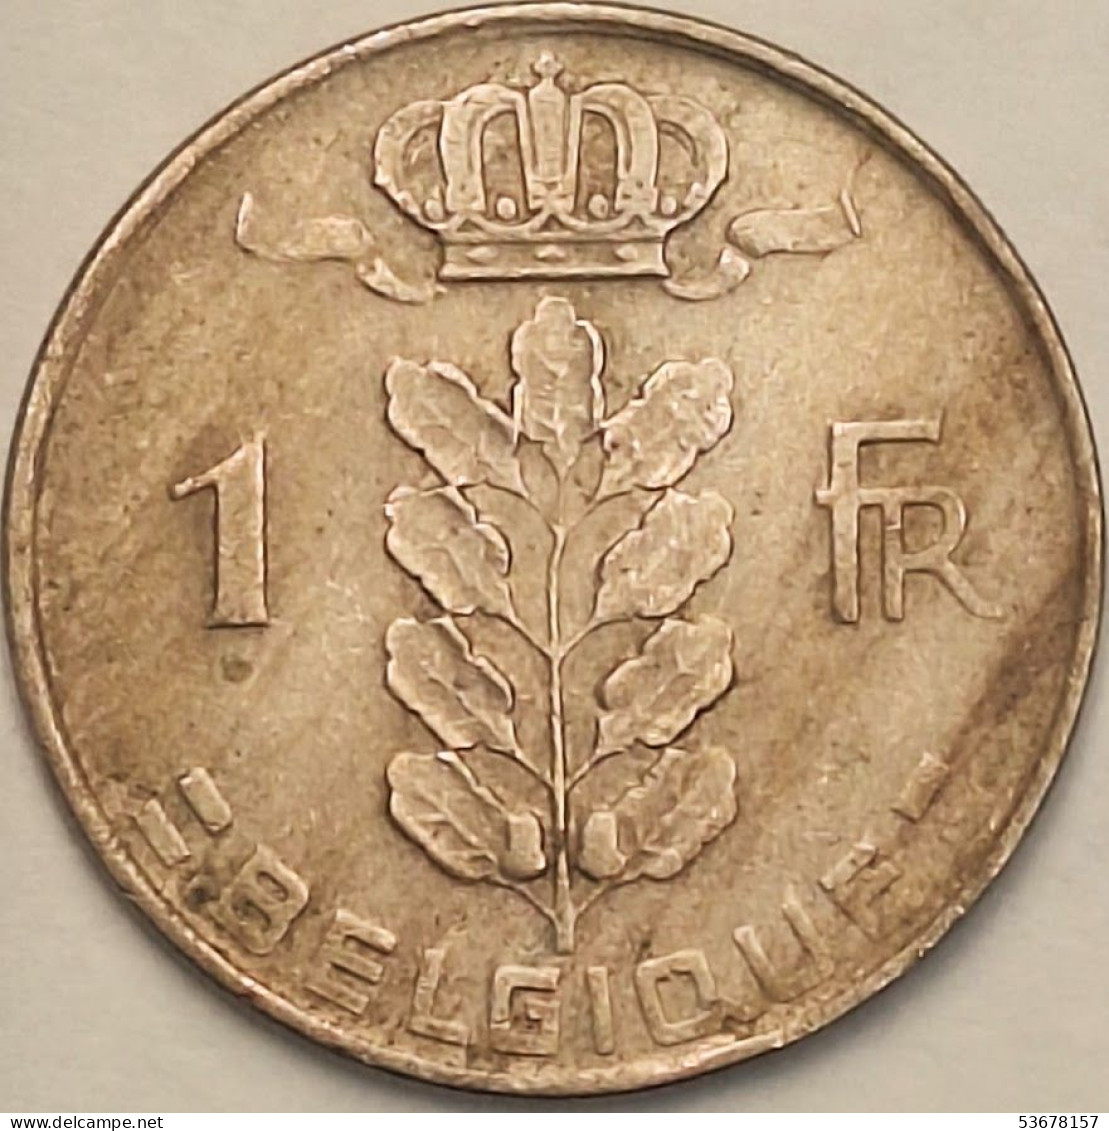 Belgium - Franc 1961, KM# 142.1 (#3110) - 1 Franc